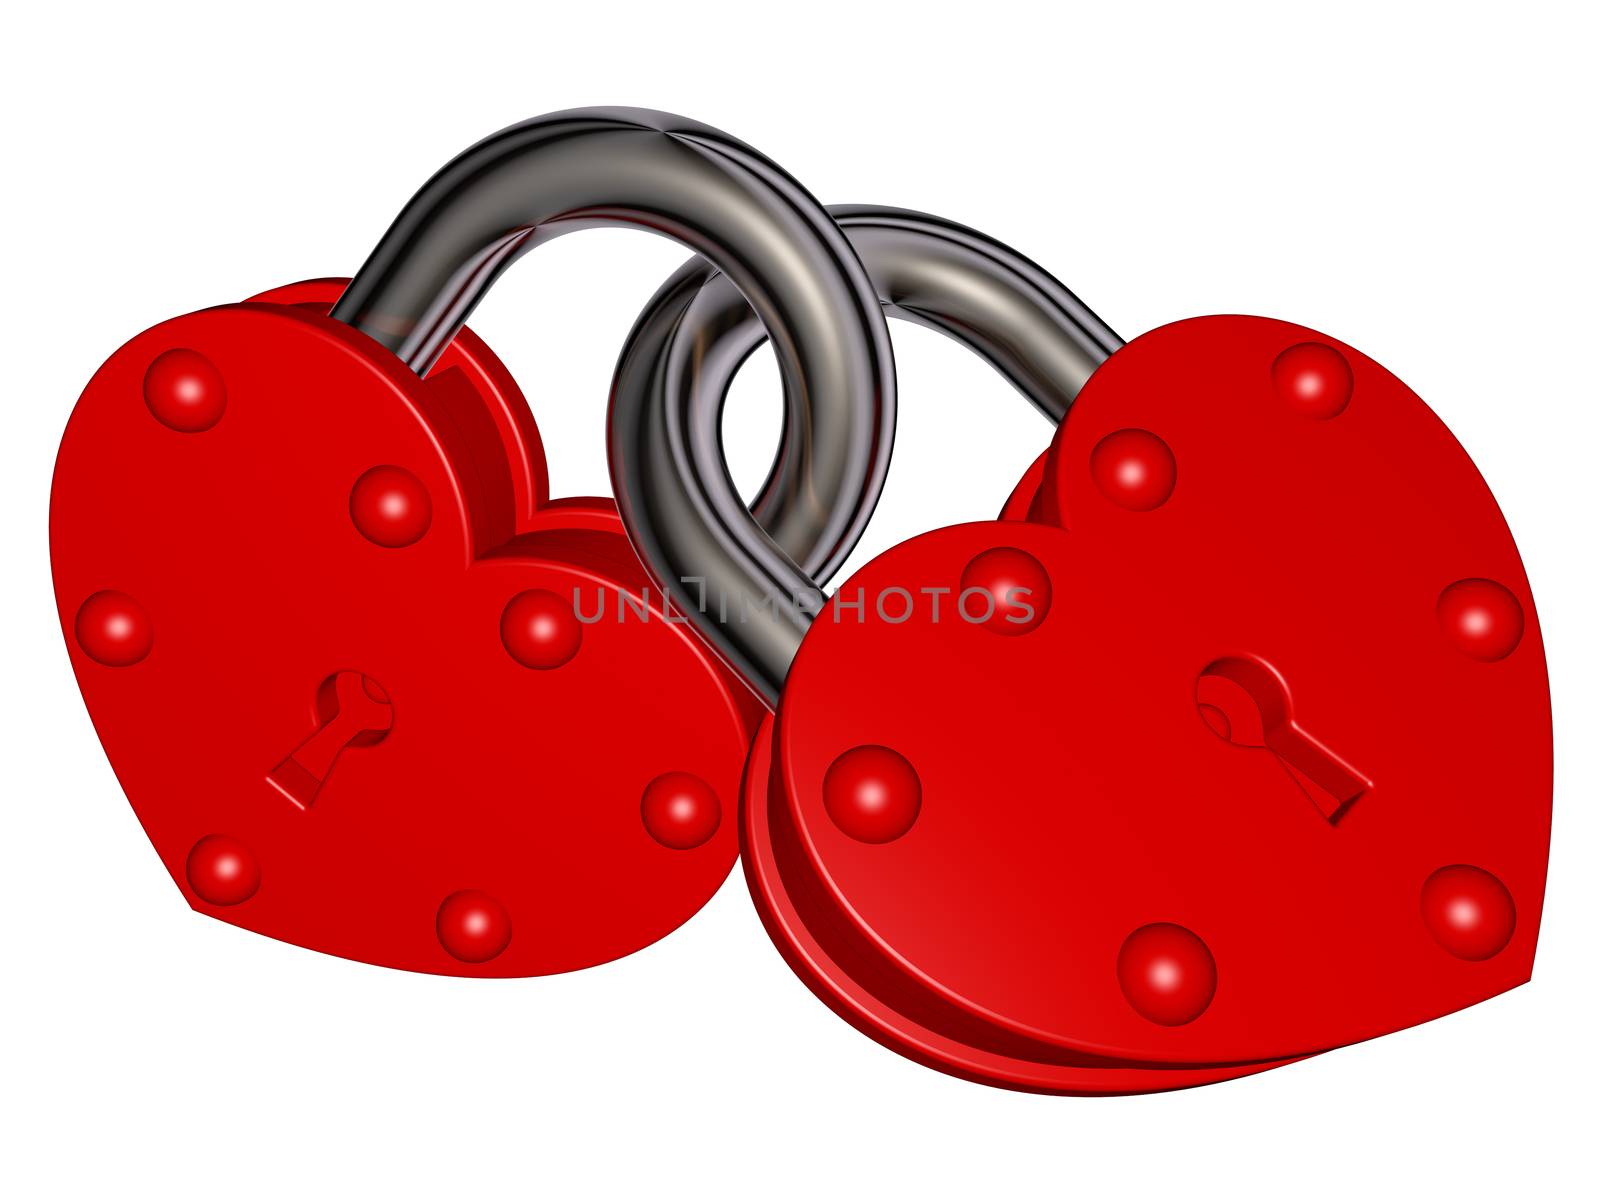 Illustration of red locks - locks of love. Isolated on white background.